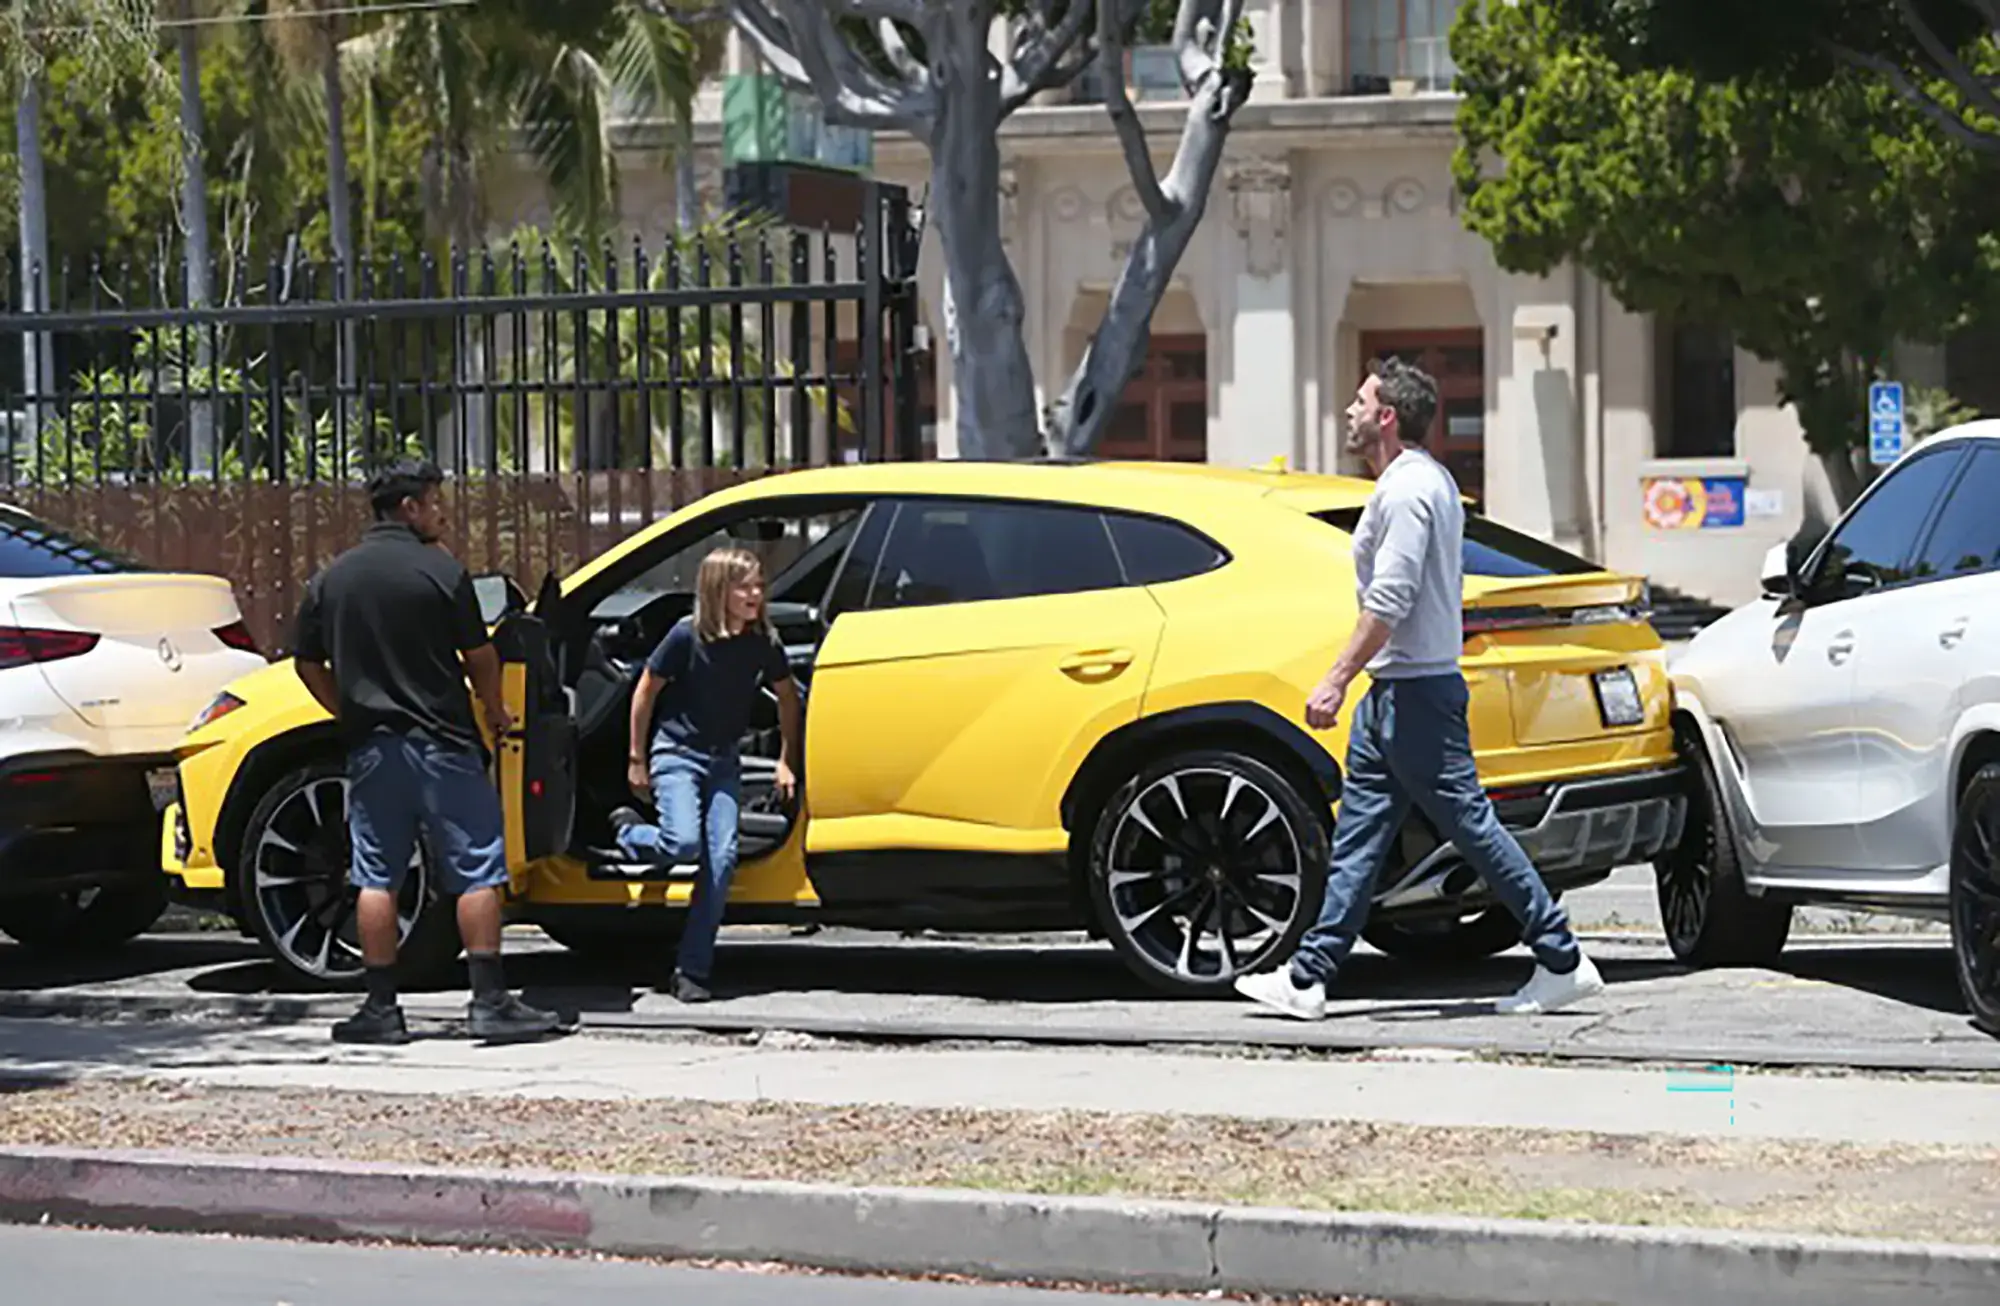 Ben Affleck's son crashed his Lamborghini Urus